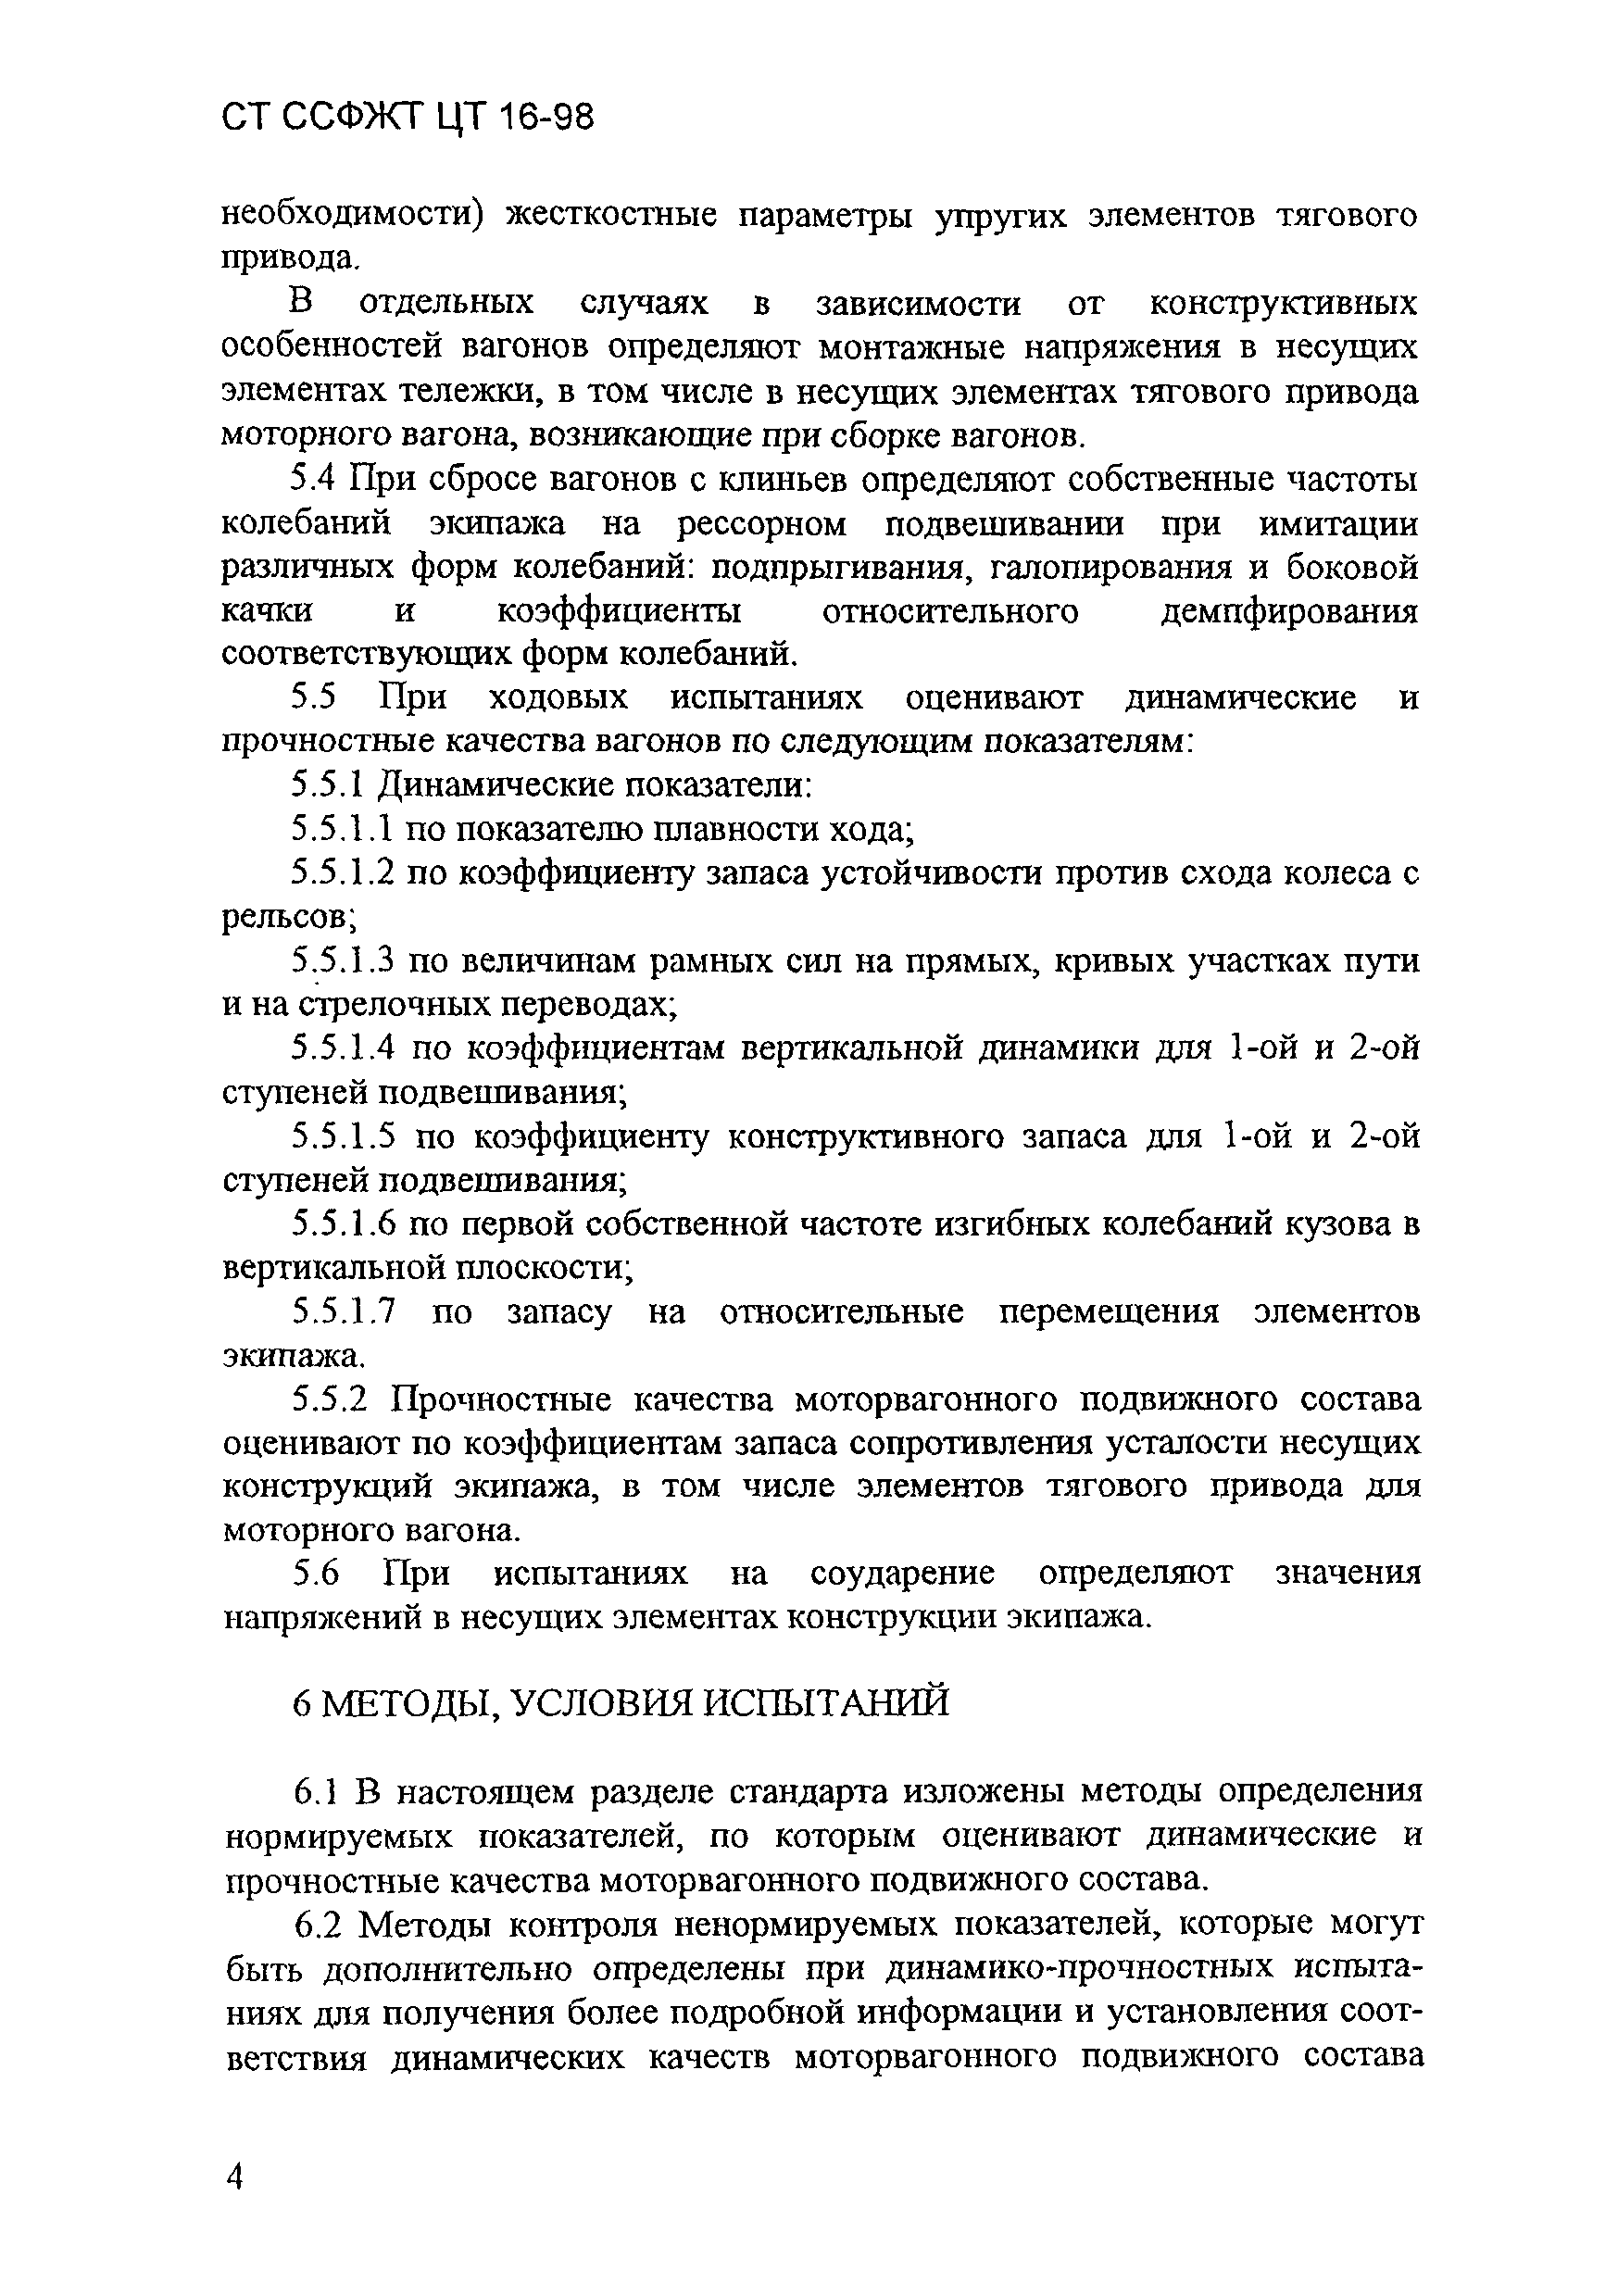 СТ ССФЖТ ЦТ 16-98